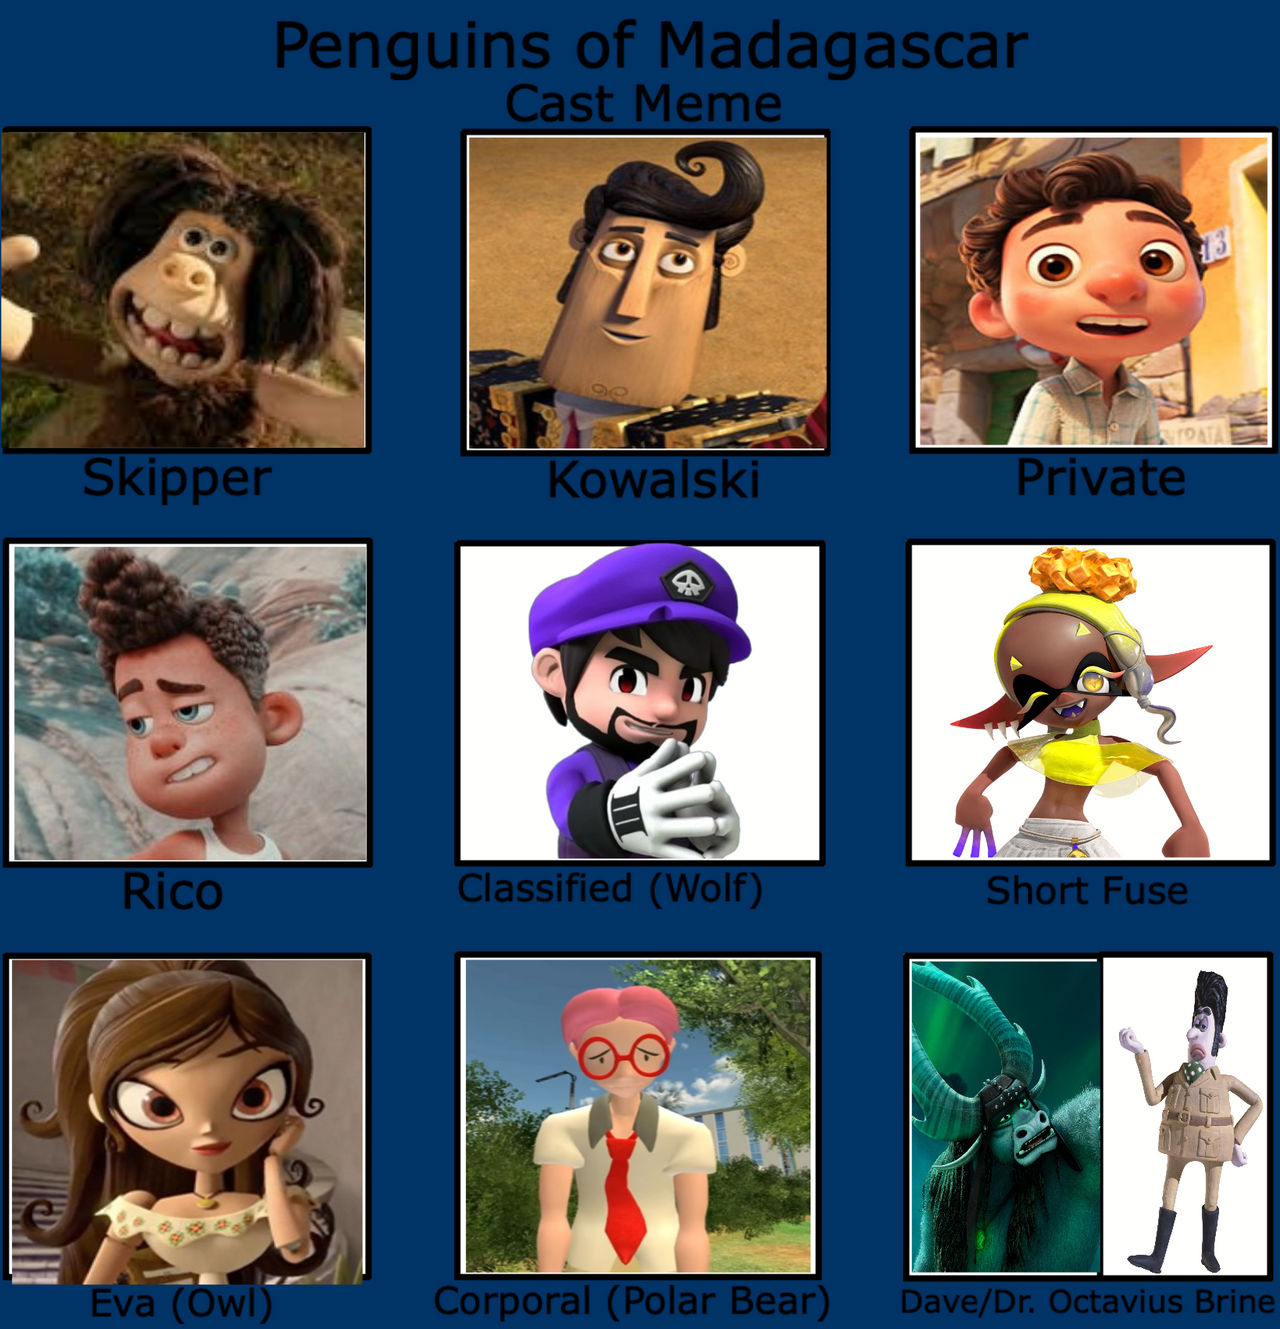 Boys of Madagascar cast meme by viviruth11 on DeviantArt